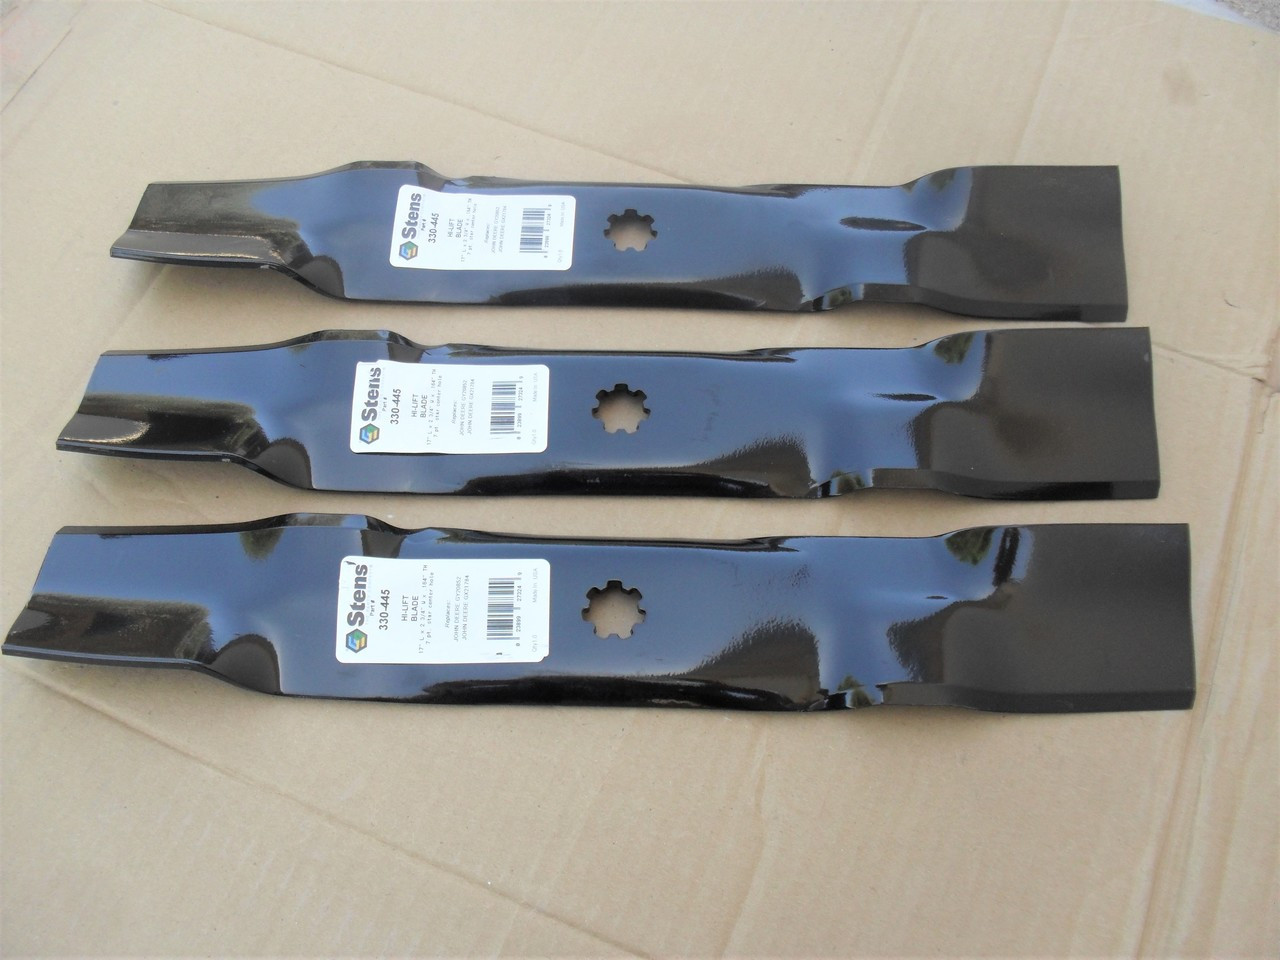 17" Mower Blades Fits John Deere 100 Series 48" GY20852 GX21784 AM137757 3